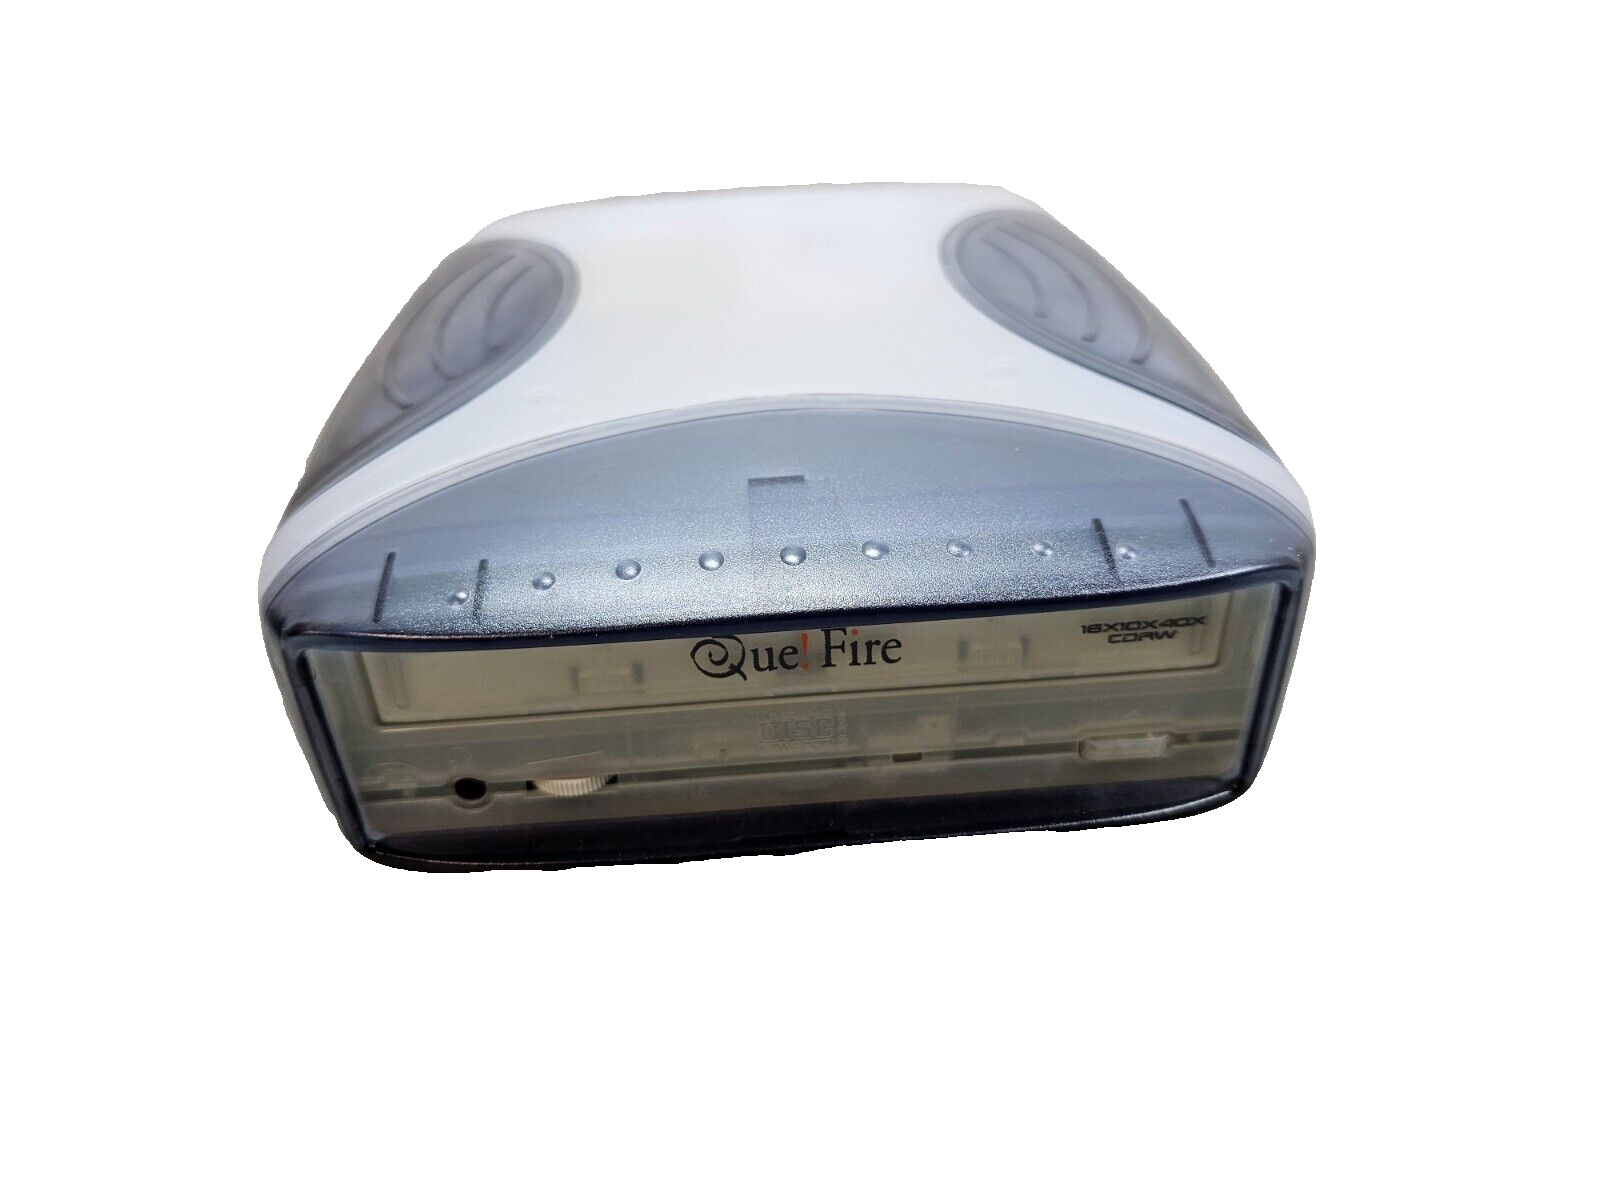 Vintage Teac QueDrive QPS-525  QueFire CD-RW CD Burner External Firewire